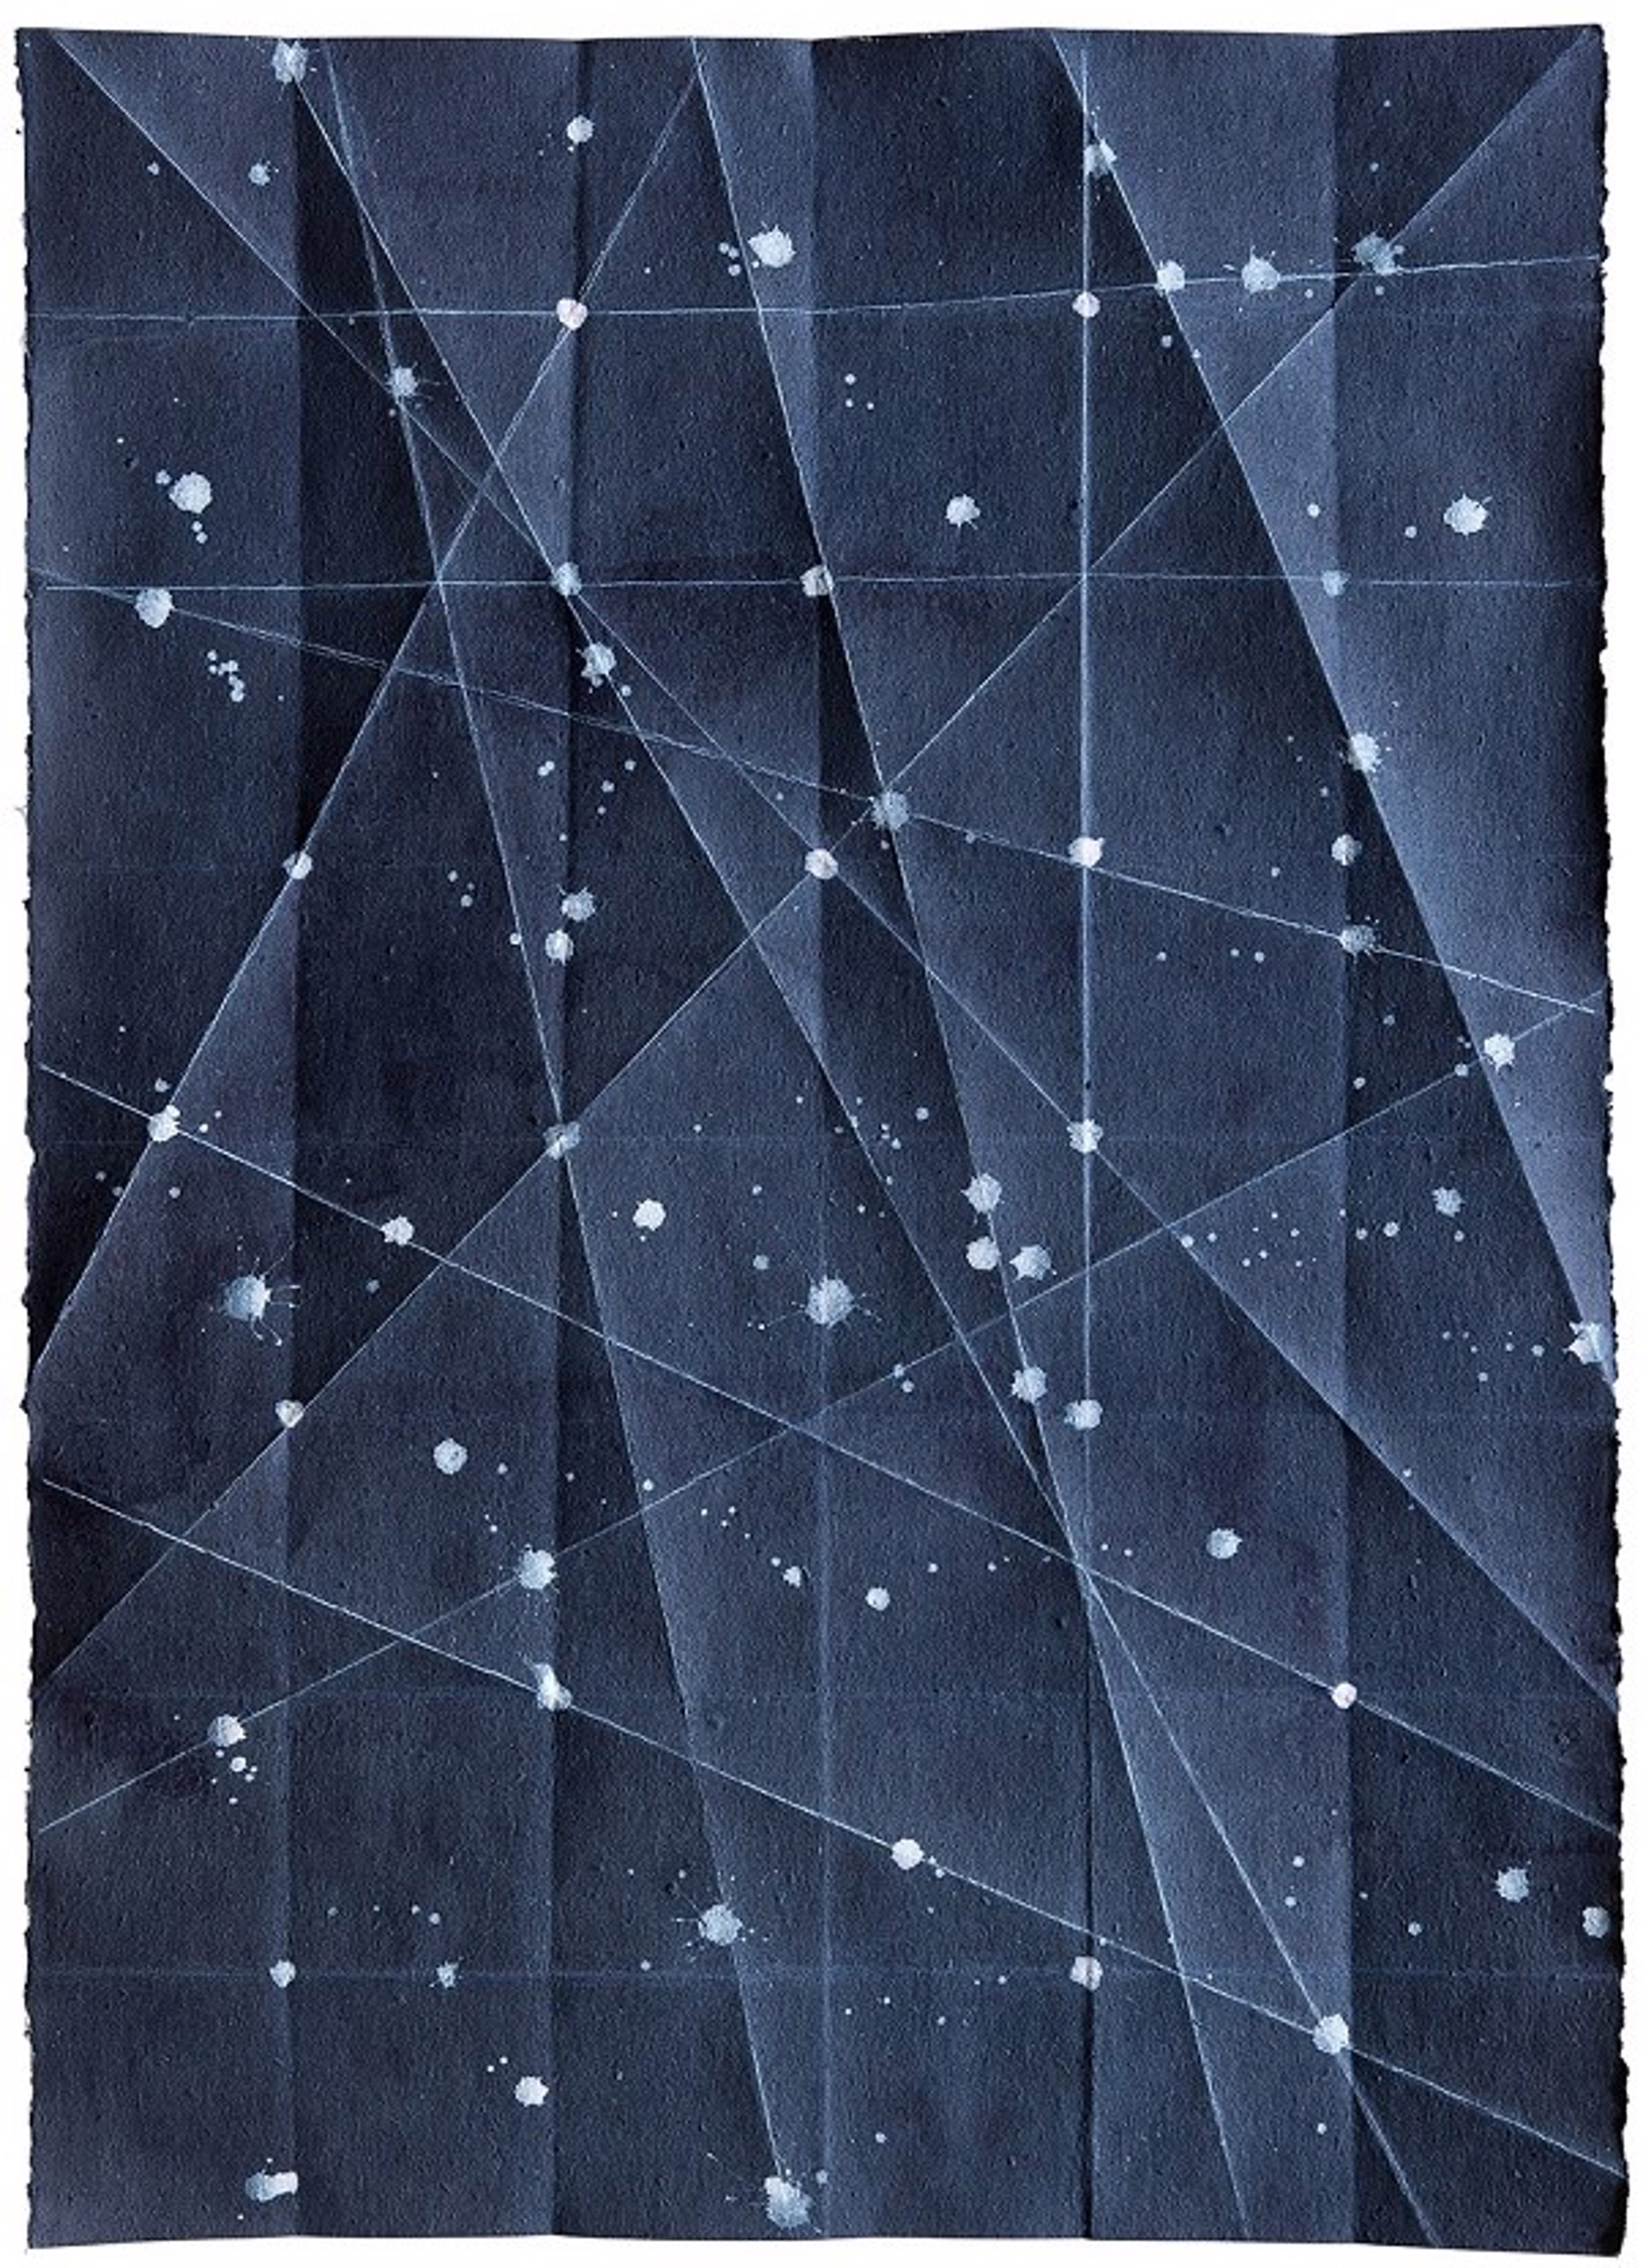 Tracking Stars 1 by Stephen Vassilakos